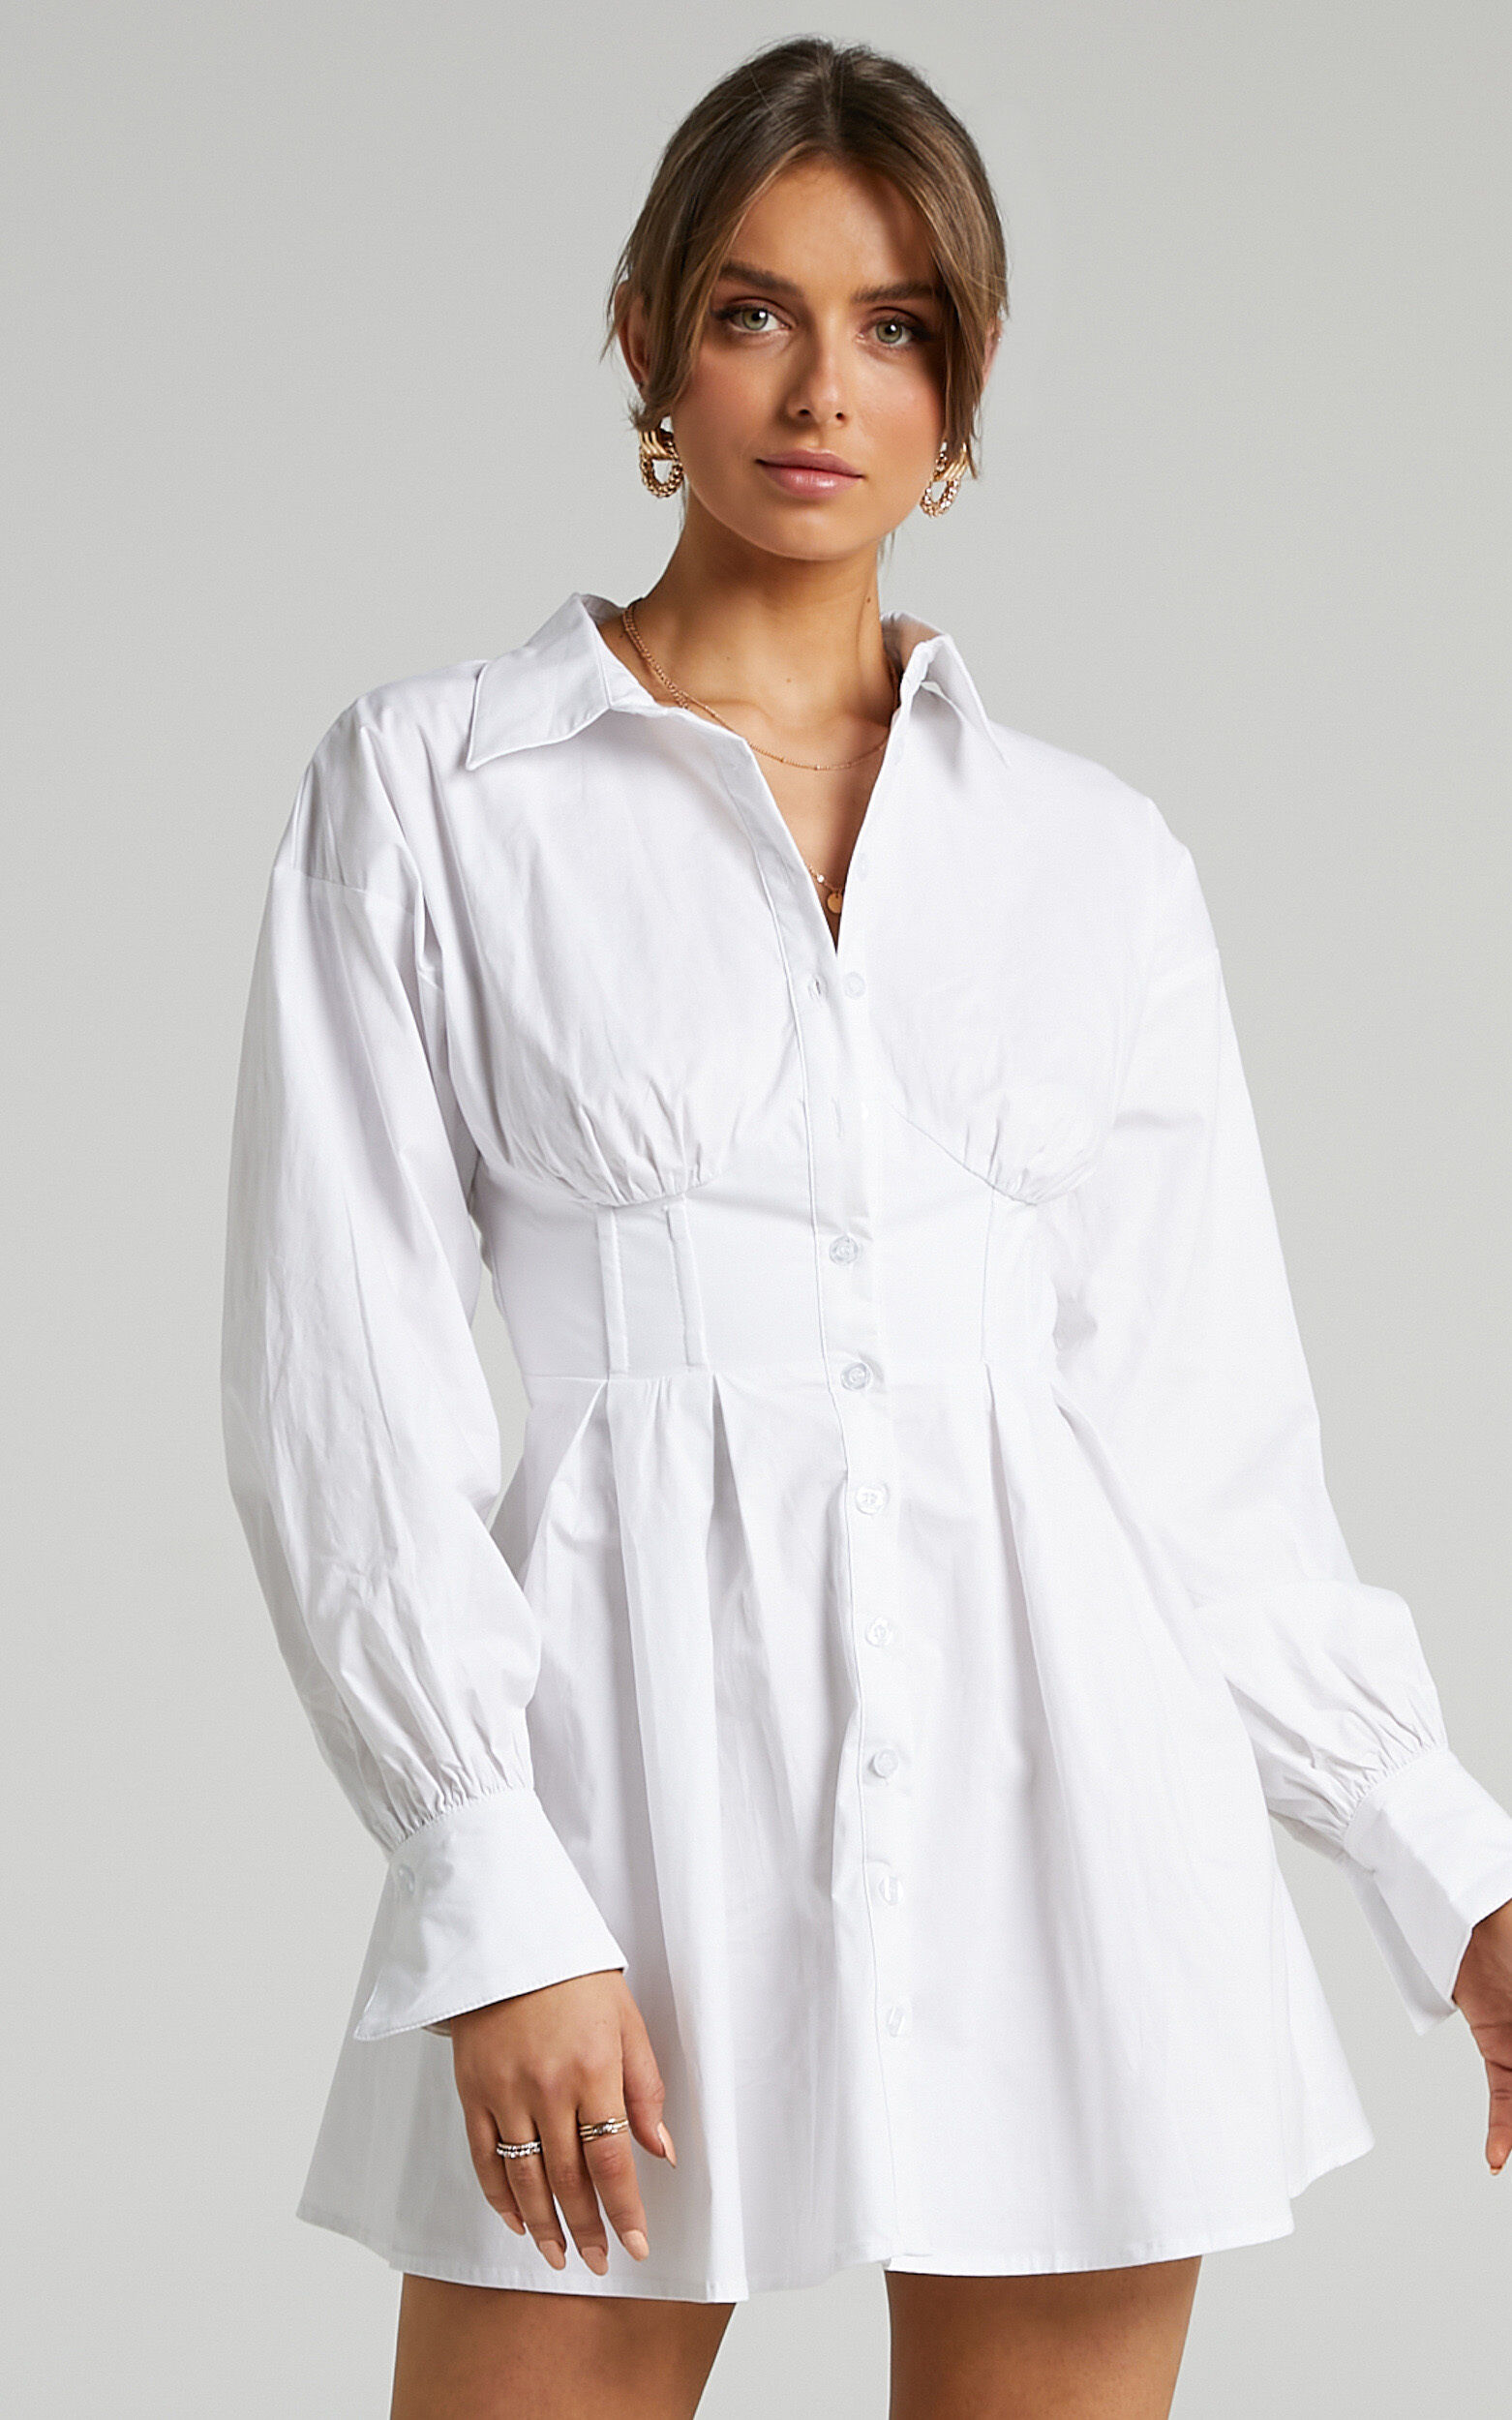 Claudette Mini Dress - Long Sleeve Corset Shirt Dress in White | Showpo